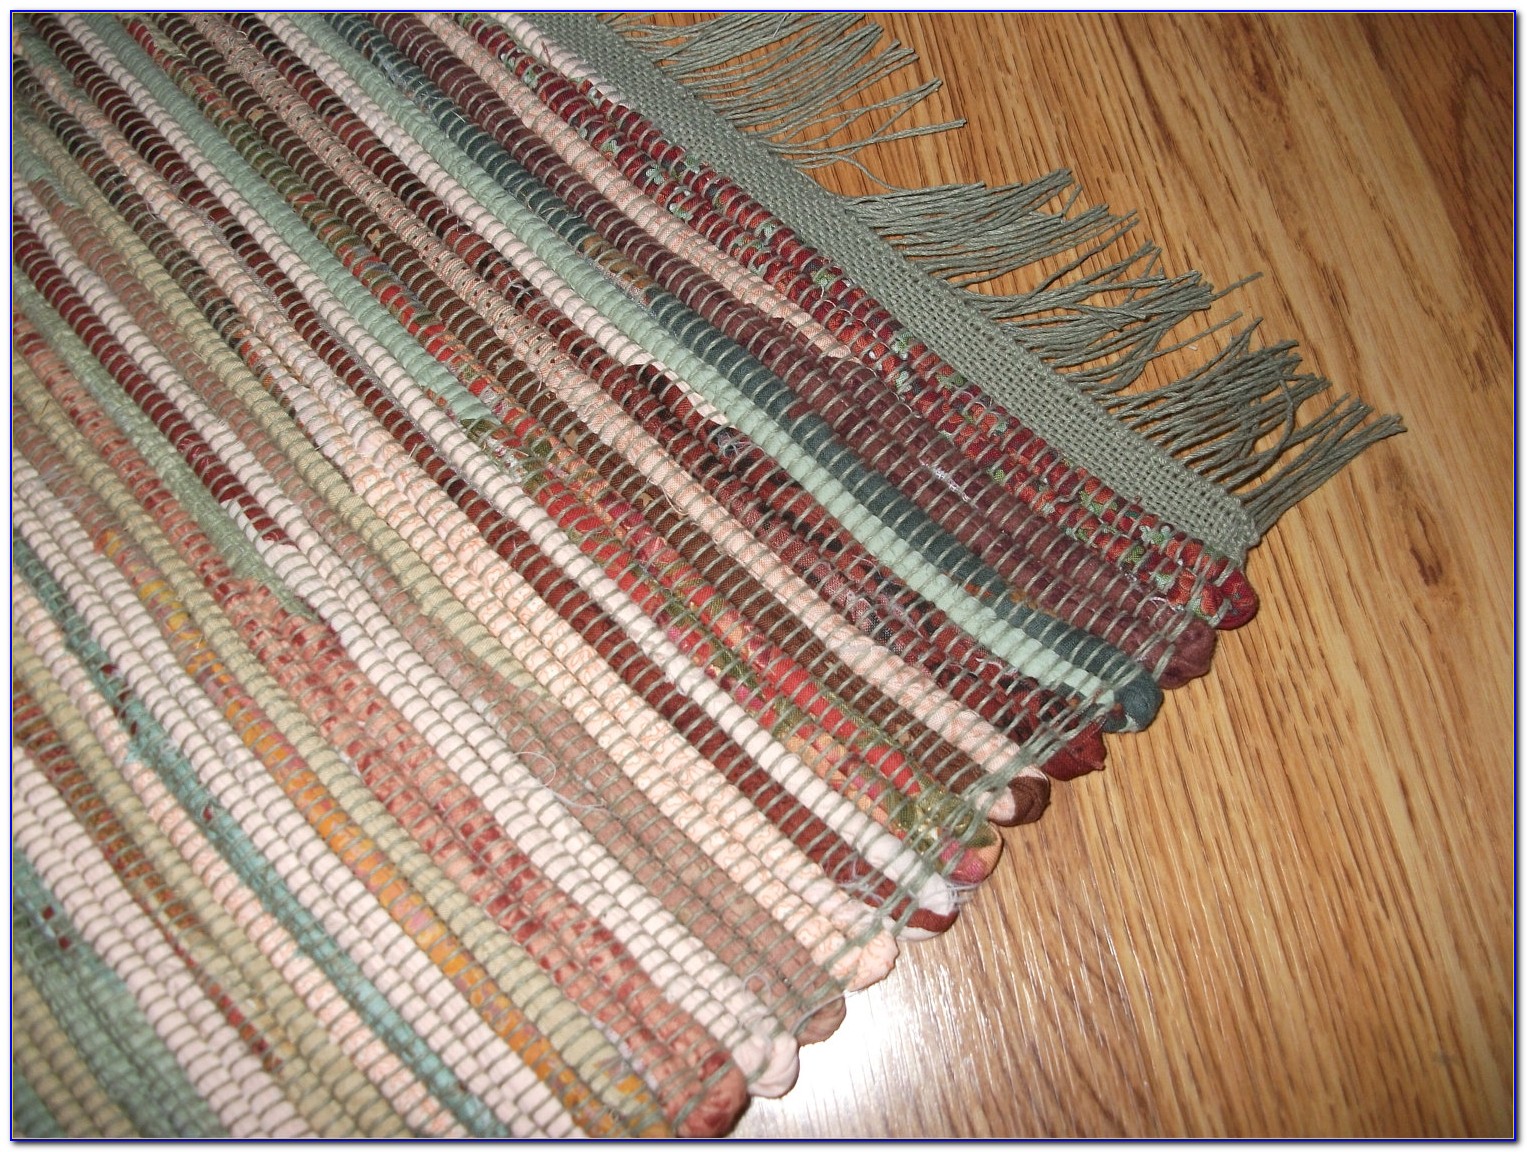 Cotton Rag Rugs Washable - Rugs : Home Design Ideas #68QabRmPVO56532